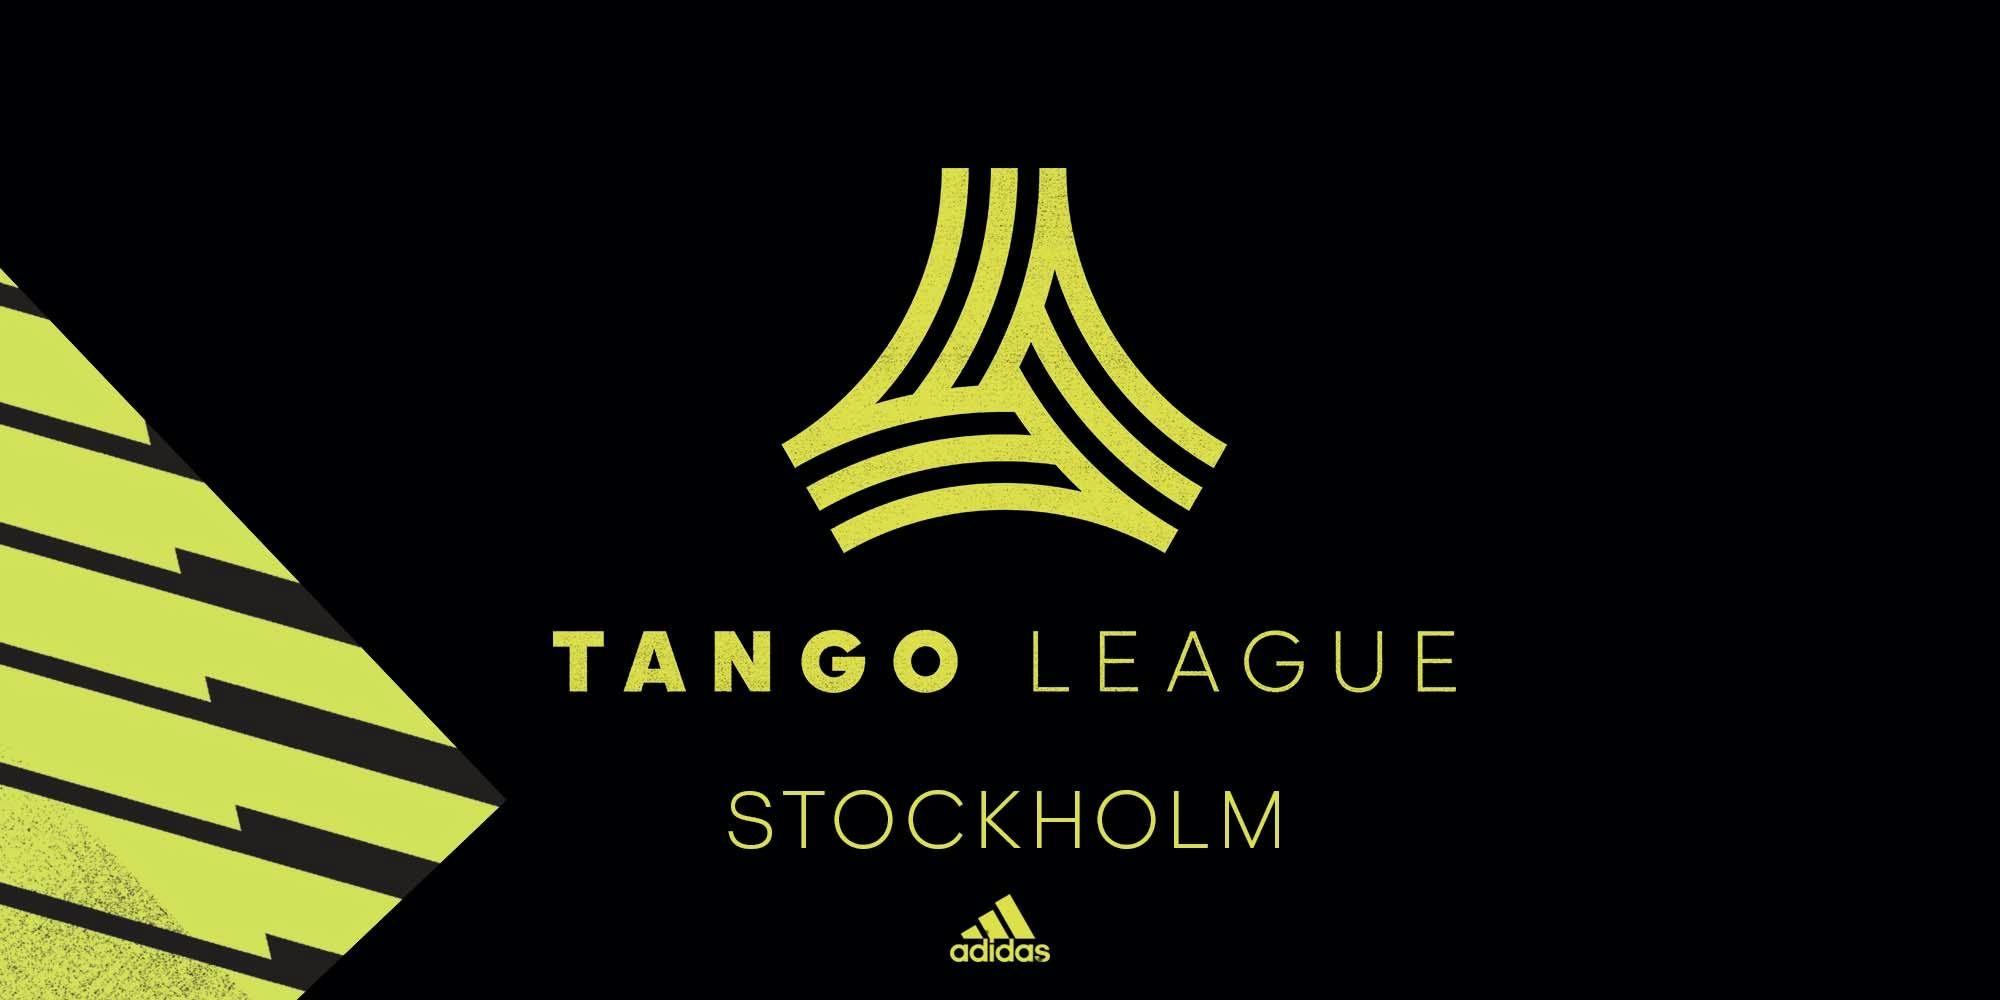 adidas fotboll Tango League event